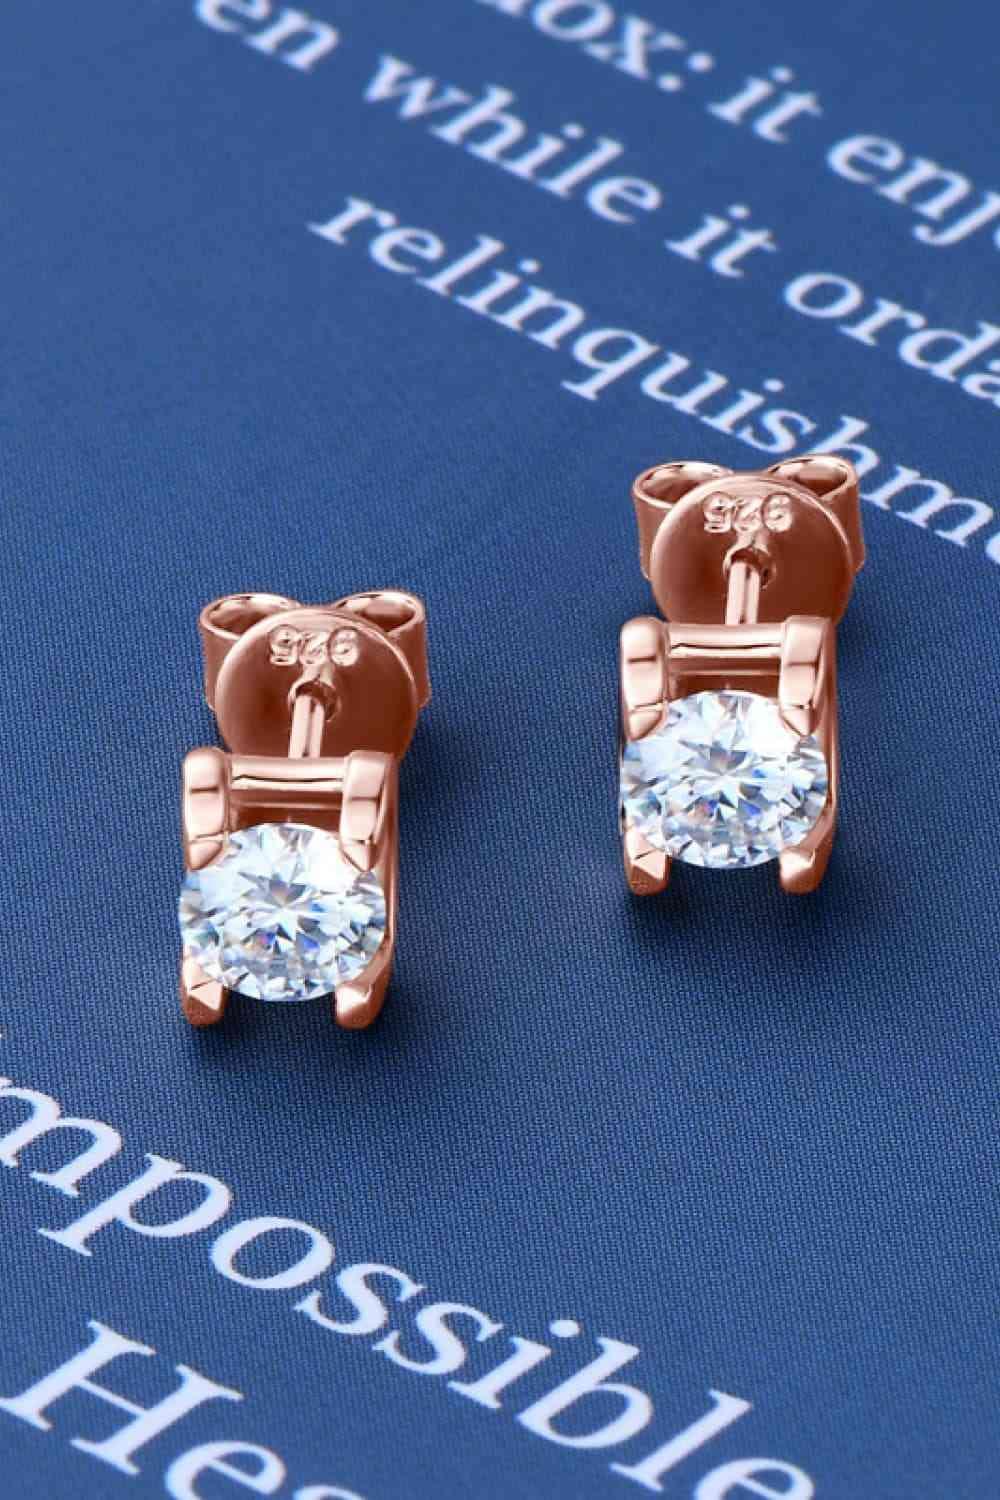 a pair of teddy bear stud earrings on a blue background